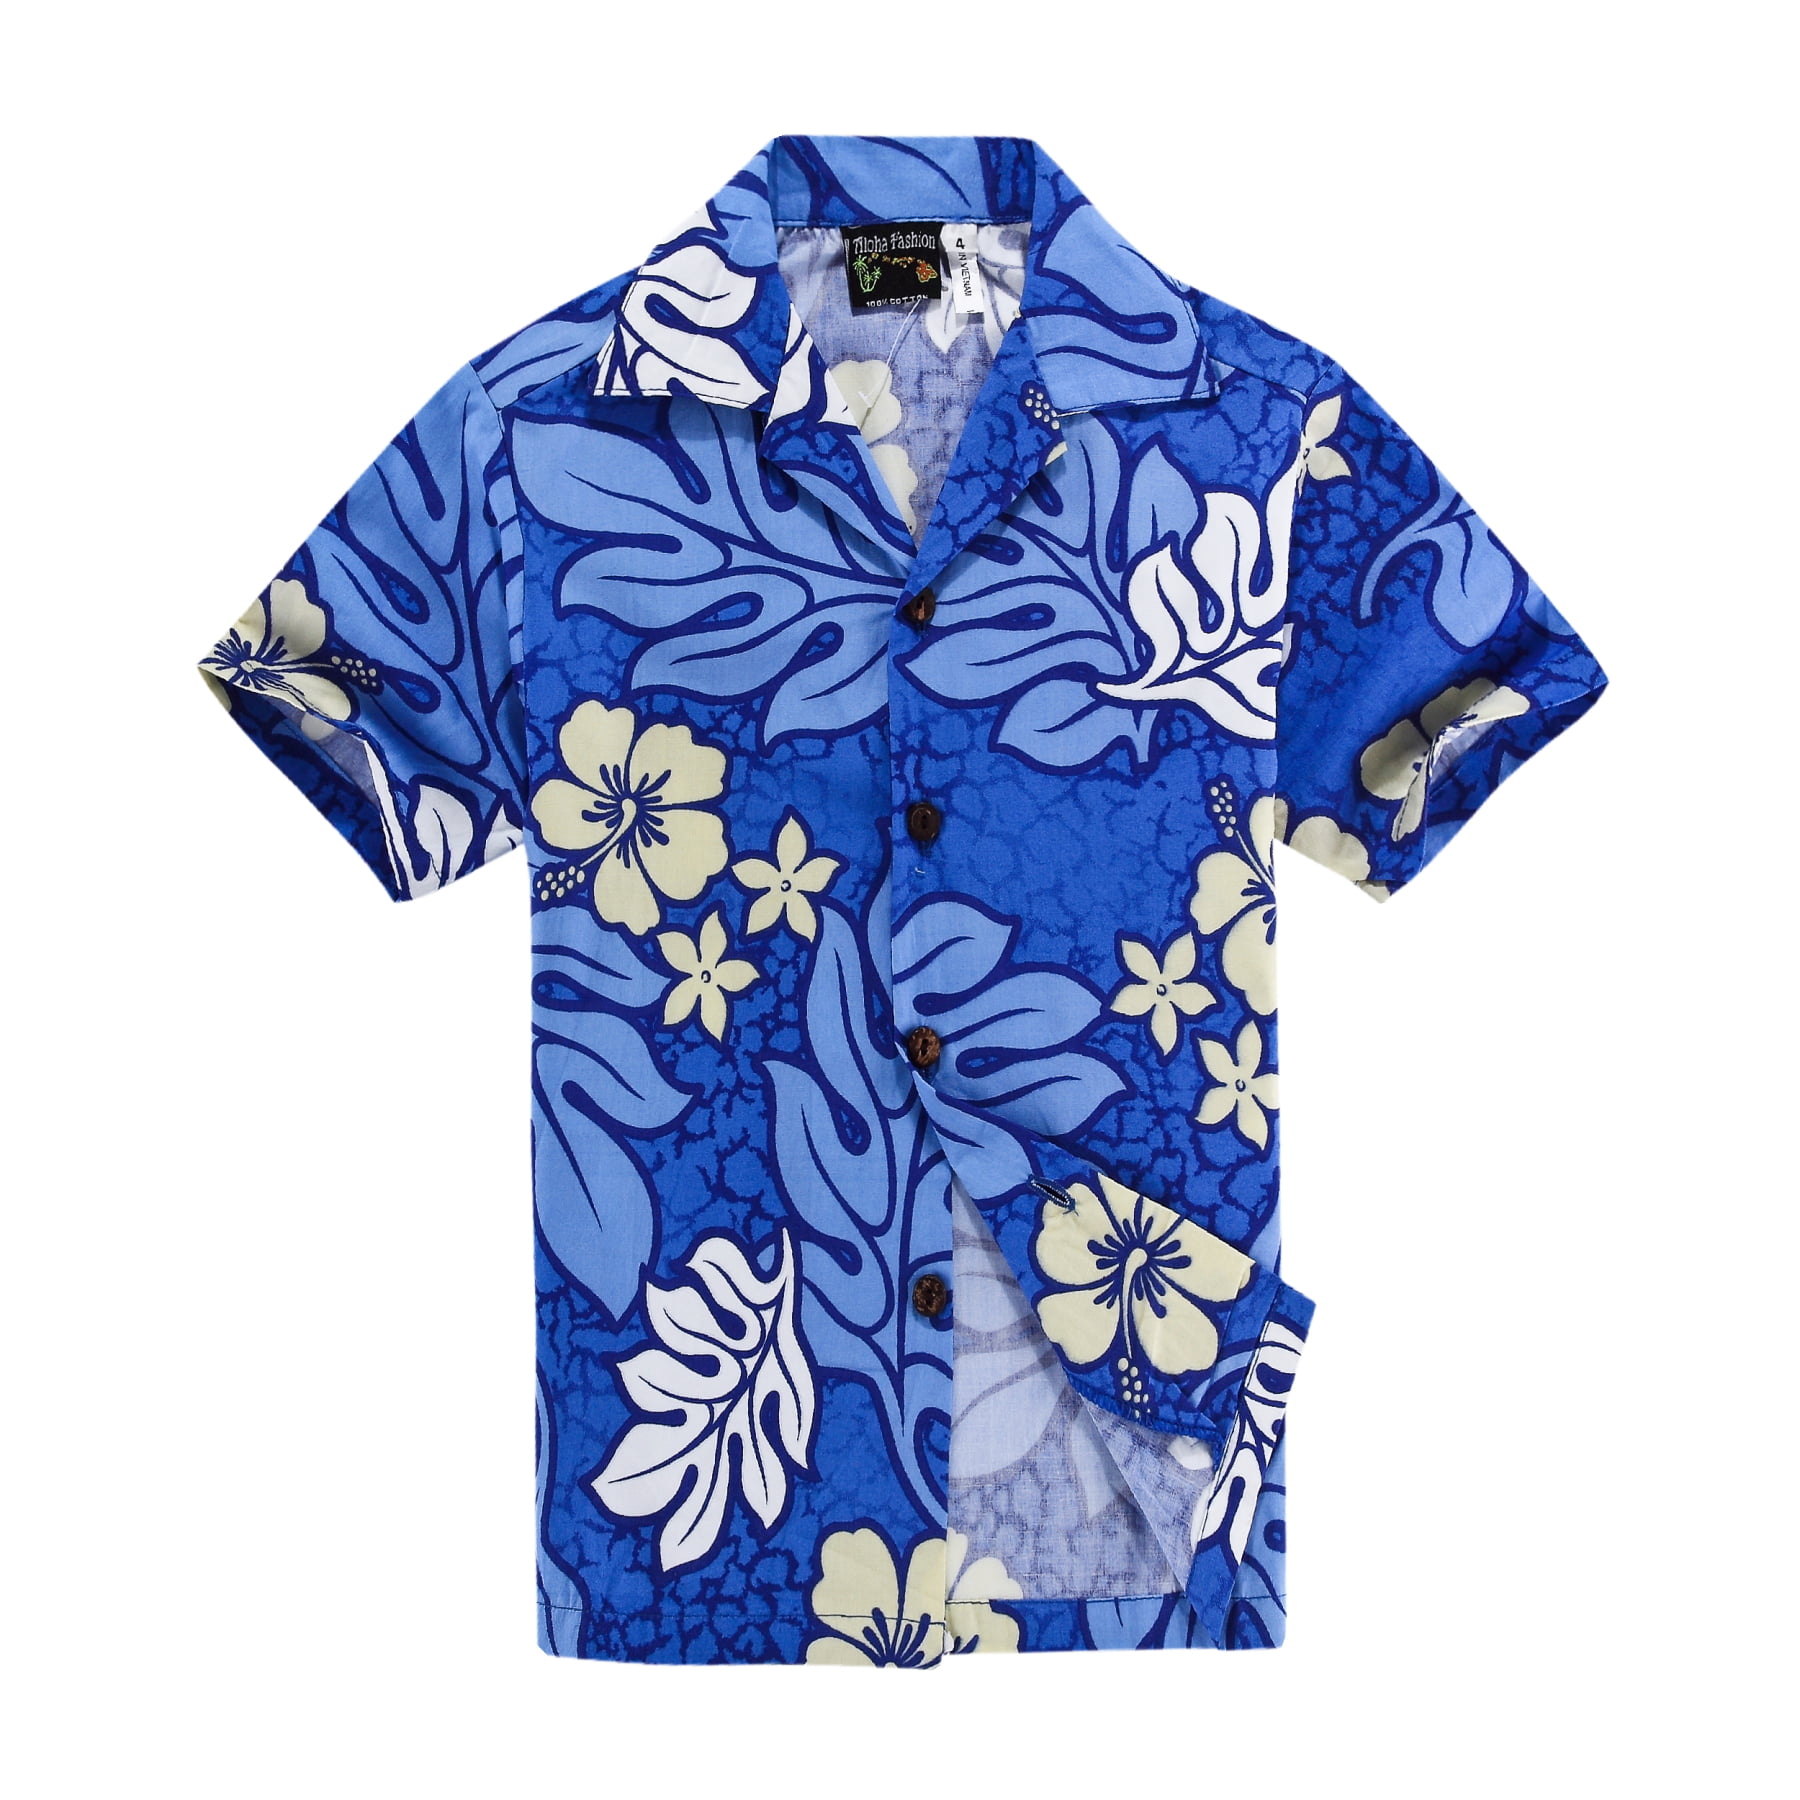 Hawaii Hangover - Hawaiian Shirt Aloha Shirt in Blue with White and